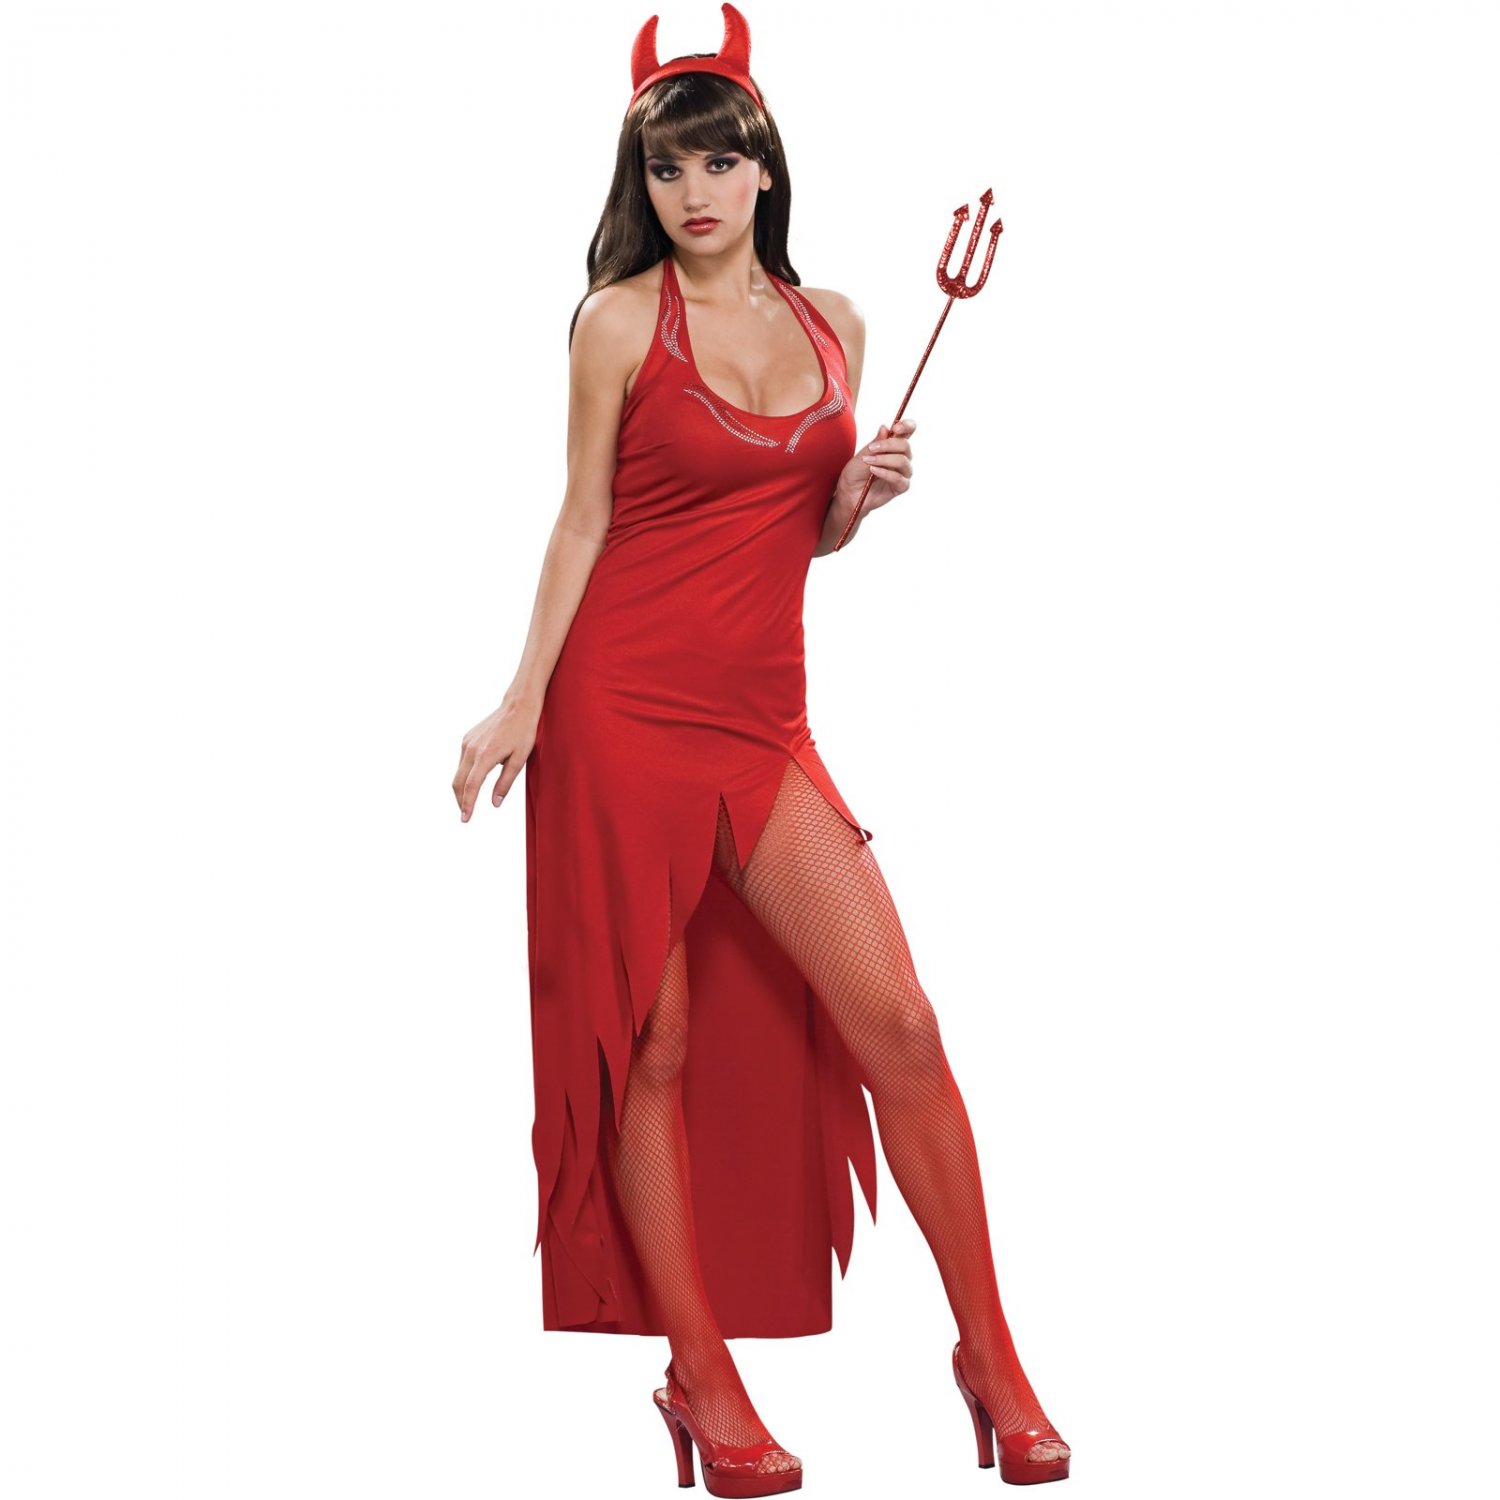 Rhinestone Devil Adult Costume.